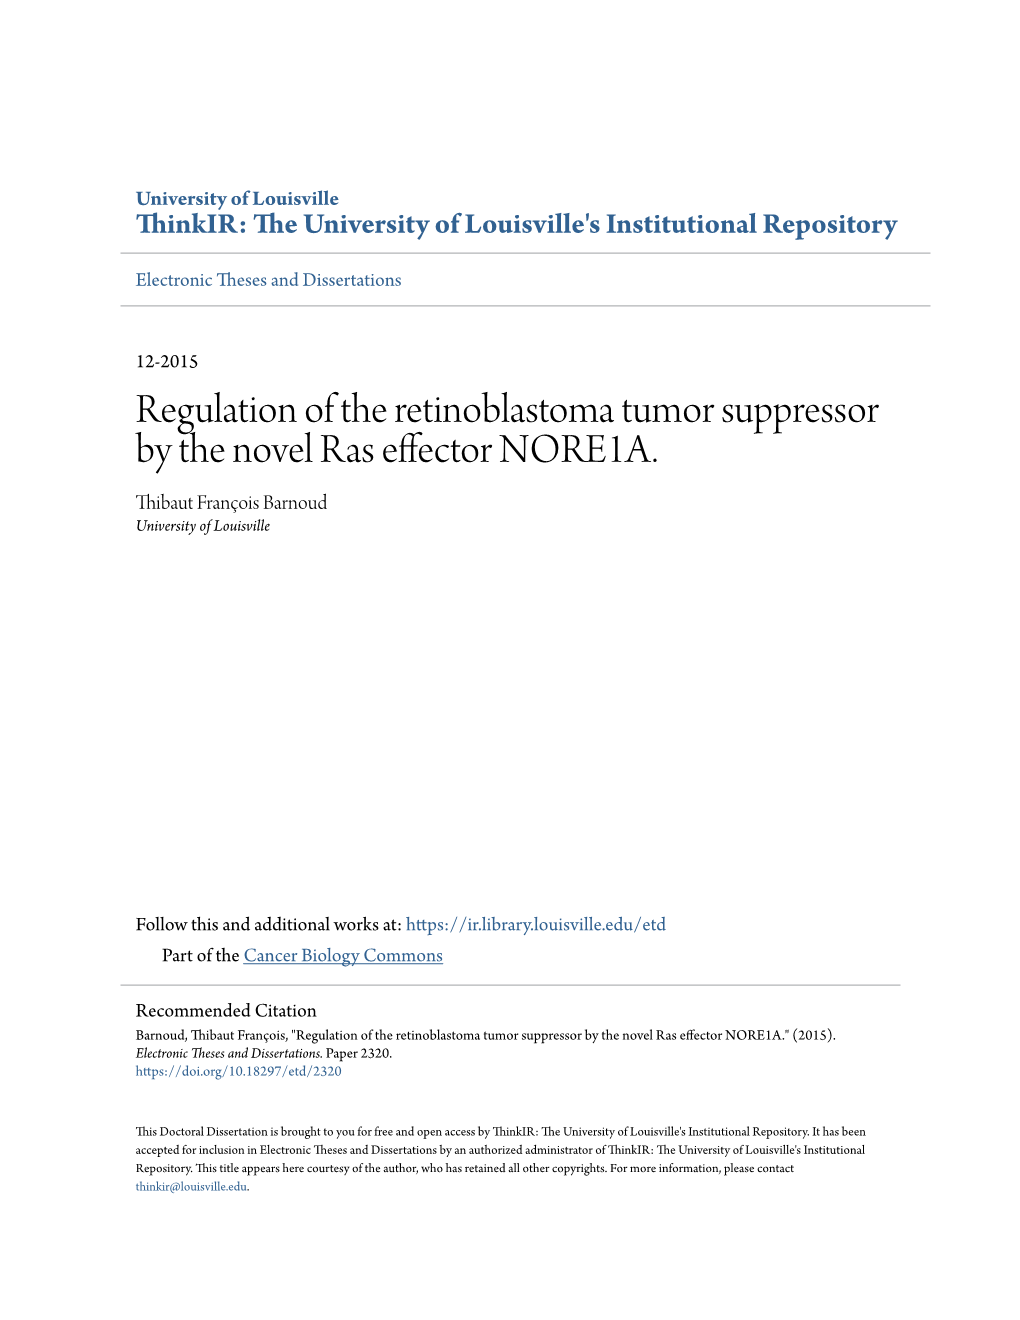 Regulation of the Retinoblastoma Tumor Suppressor by the Novel Ras Effector NORE1A. Thibaut François Barnoud University of Louisville